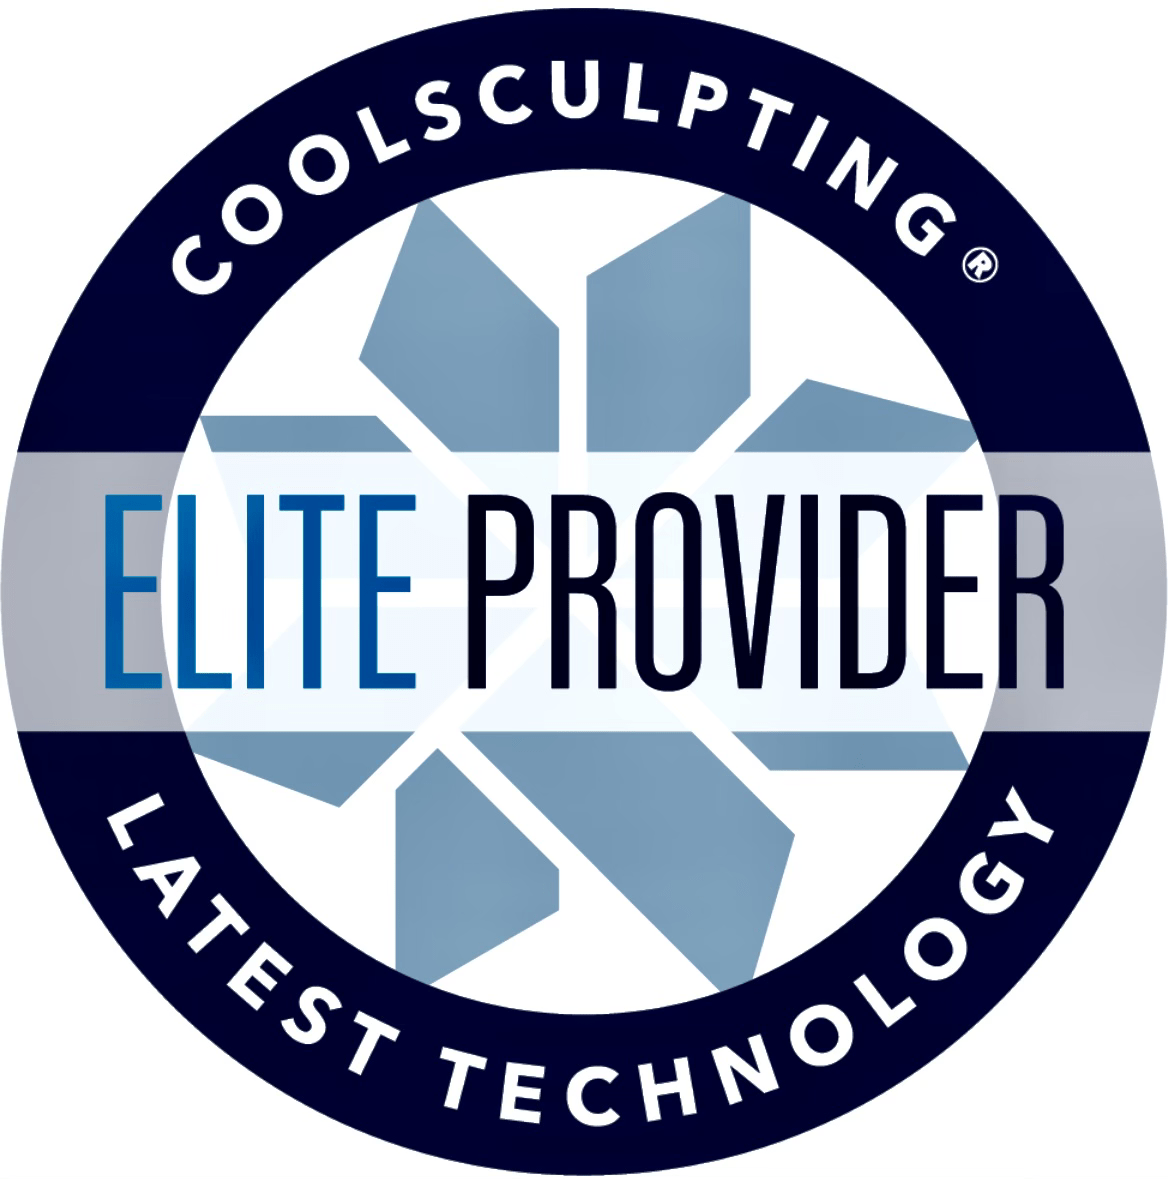 Coolsculpting elite provider at Best Medspa in Lincolnwood IL photo